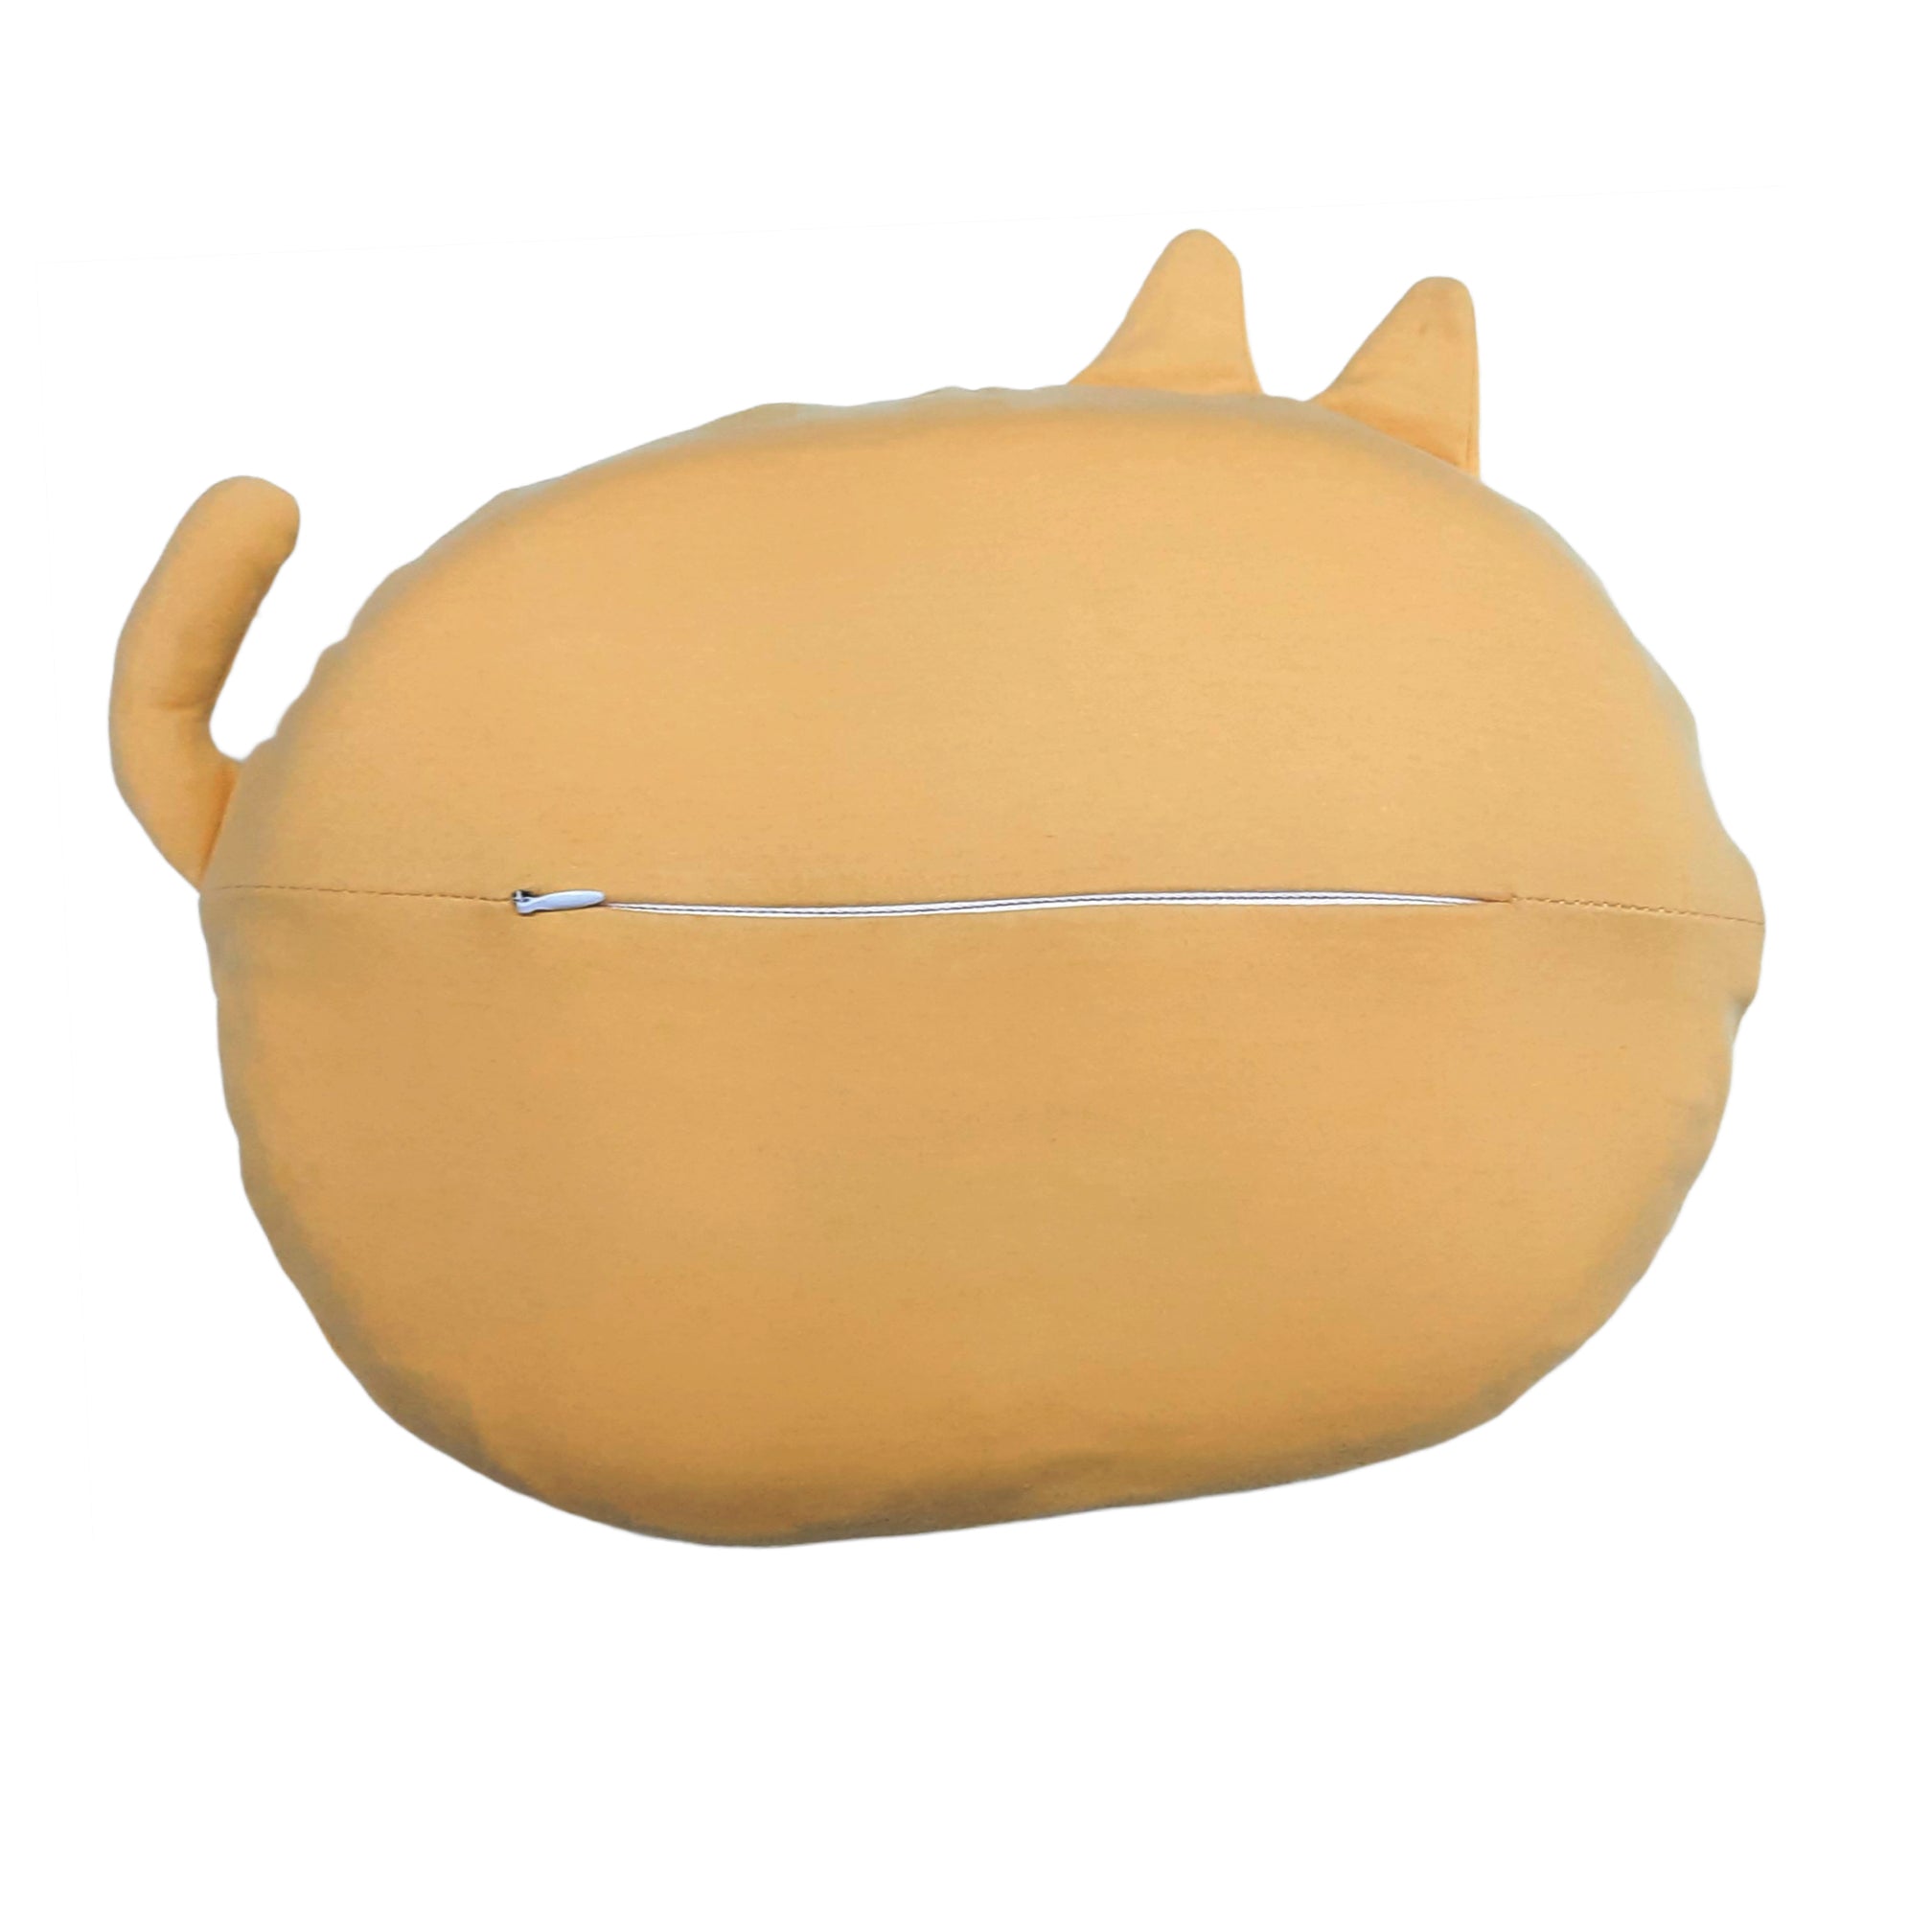 Cat Yellow Memory Pillow